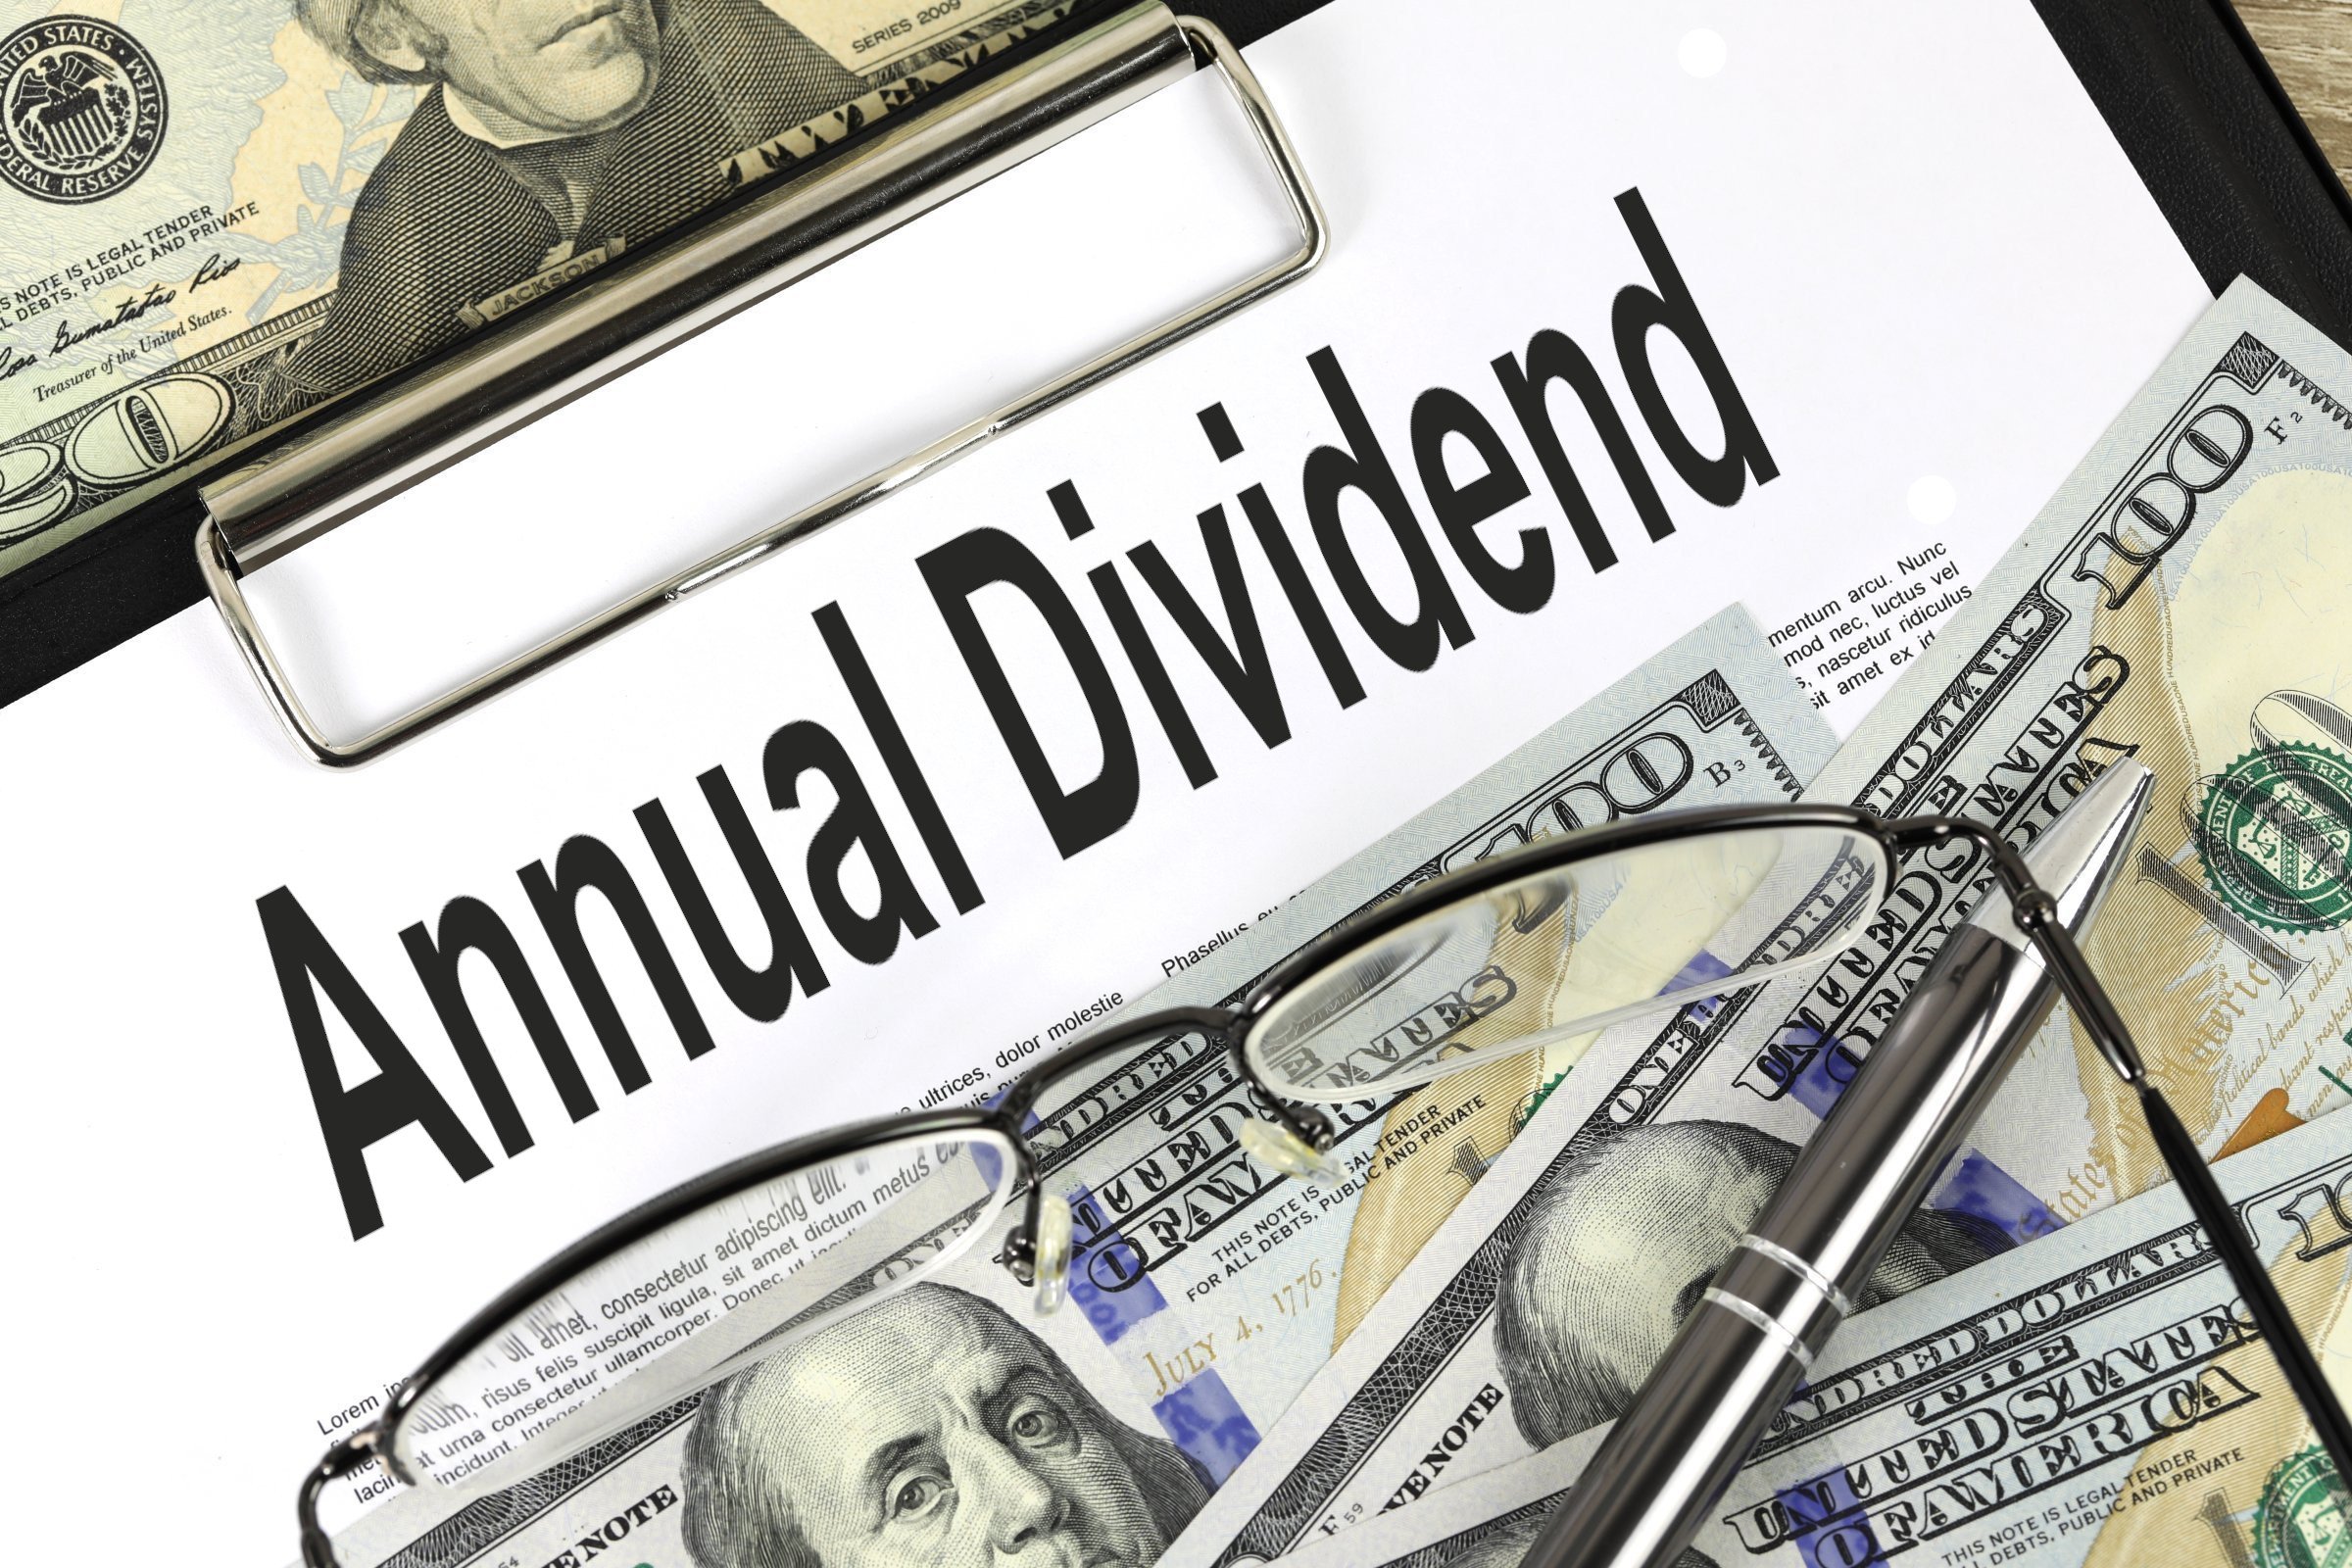 annual dividend